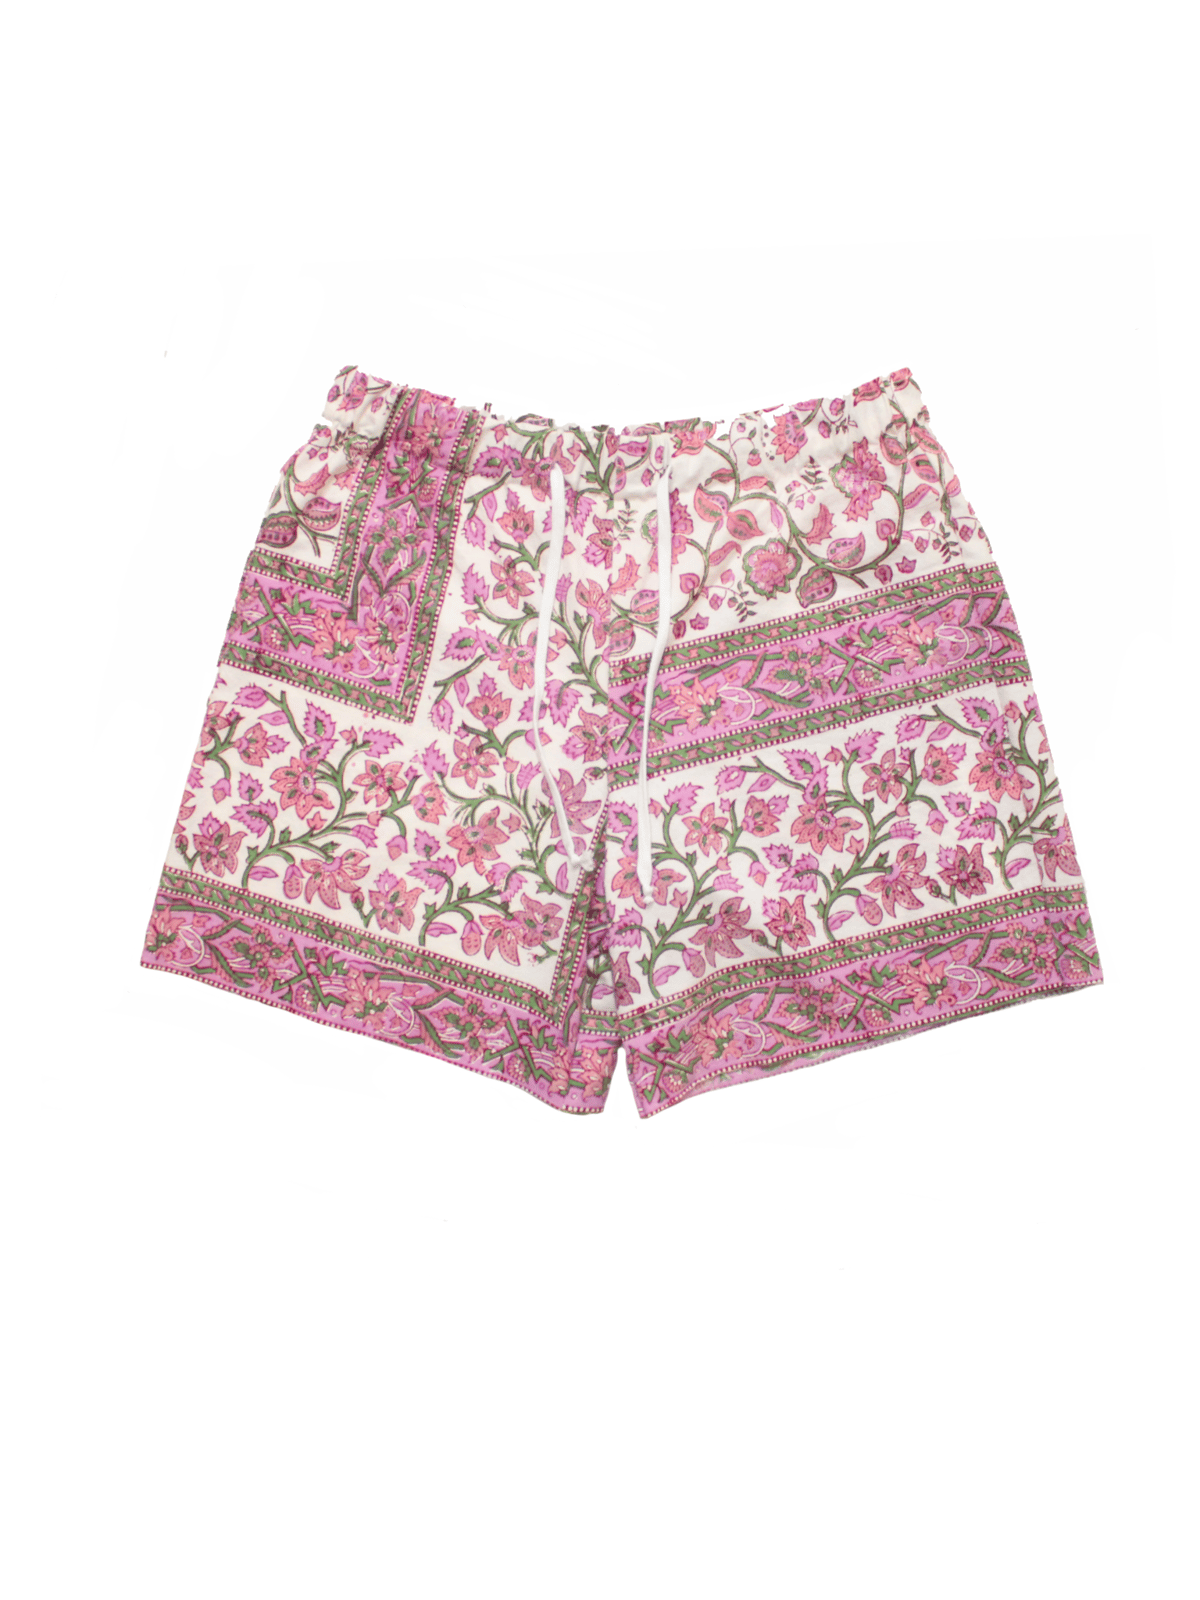 Image of Floral print shorts 